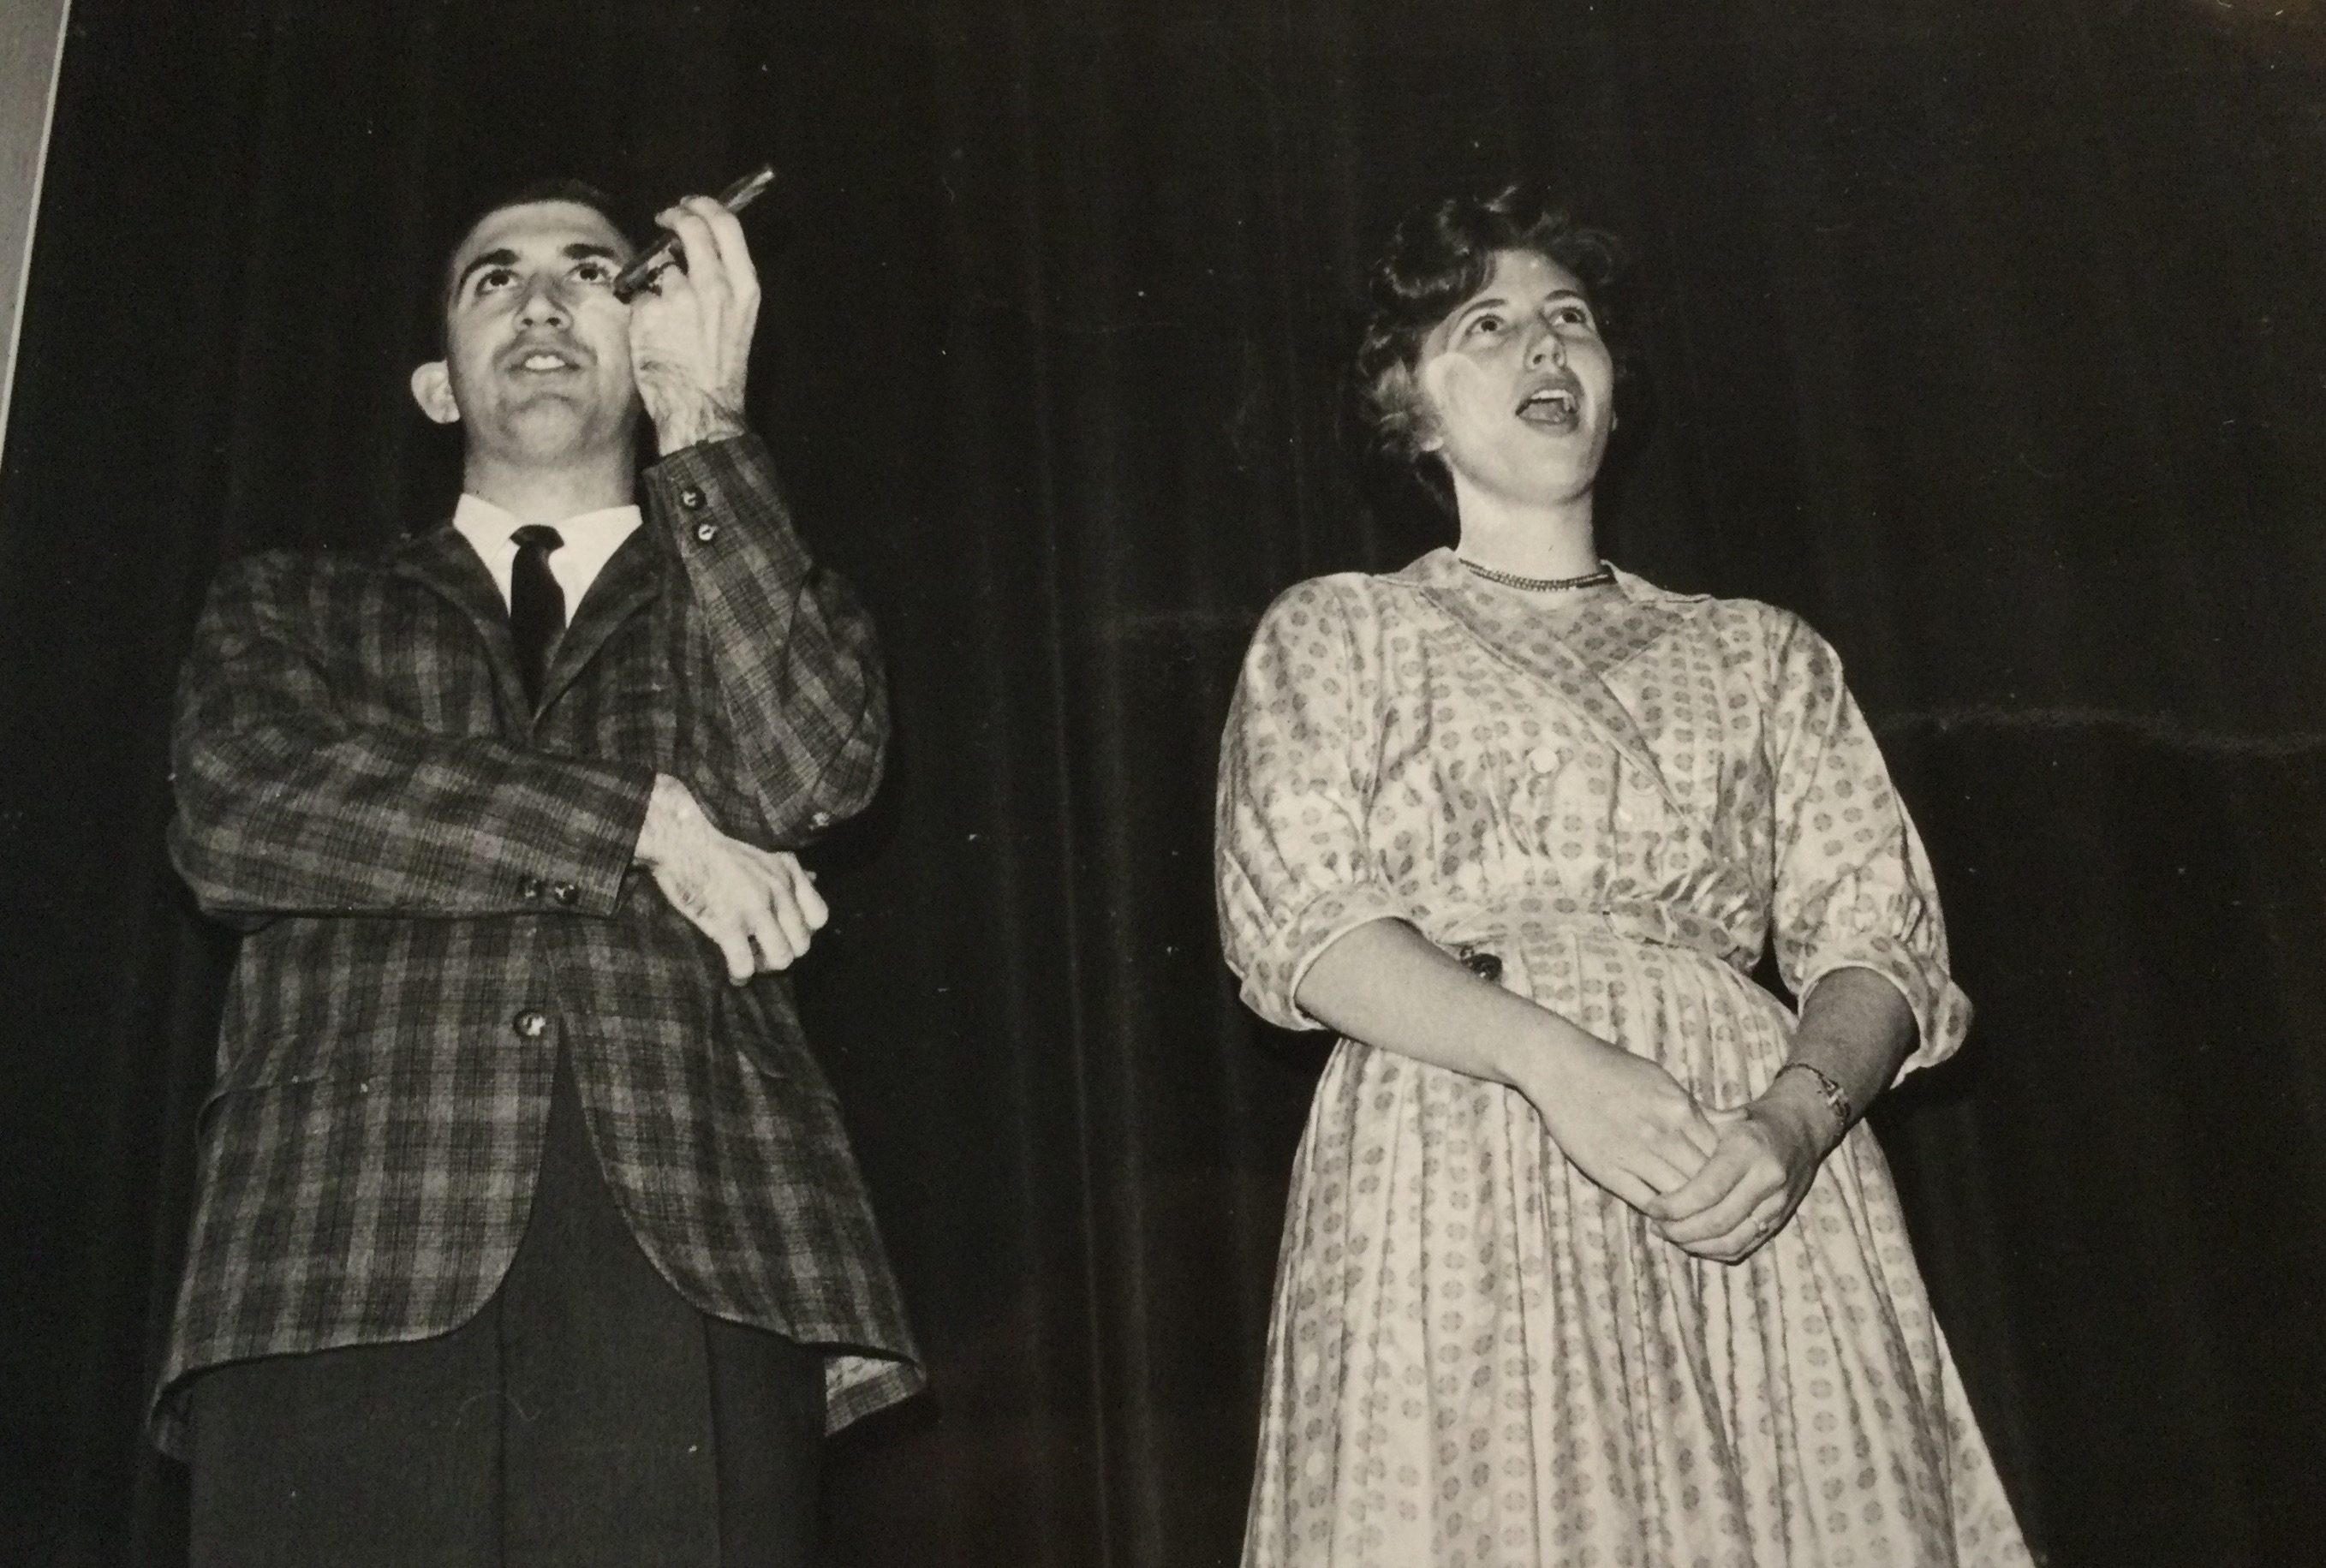 Burns & Allen, LBC Minstrel Show, 1964 